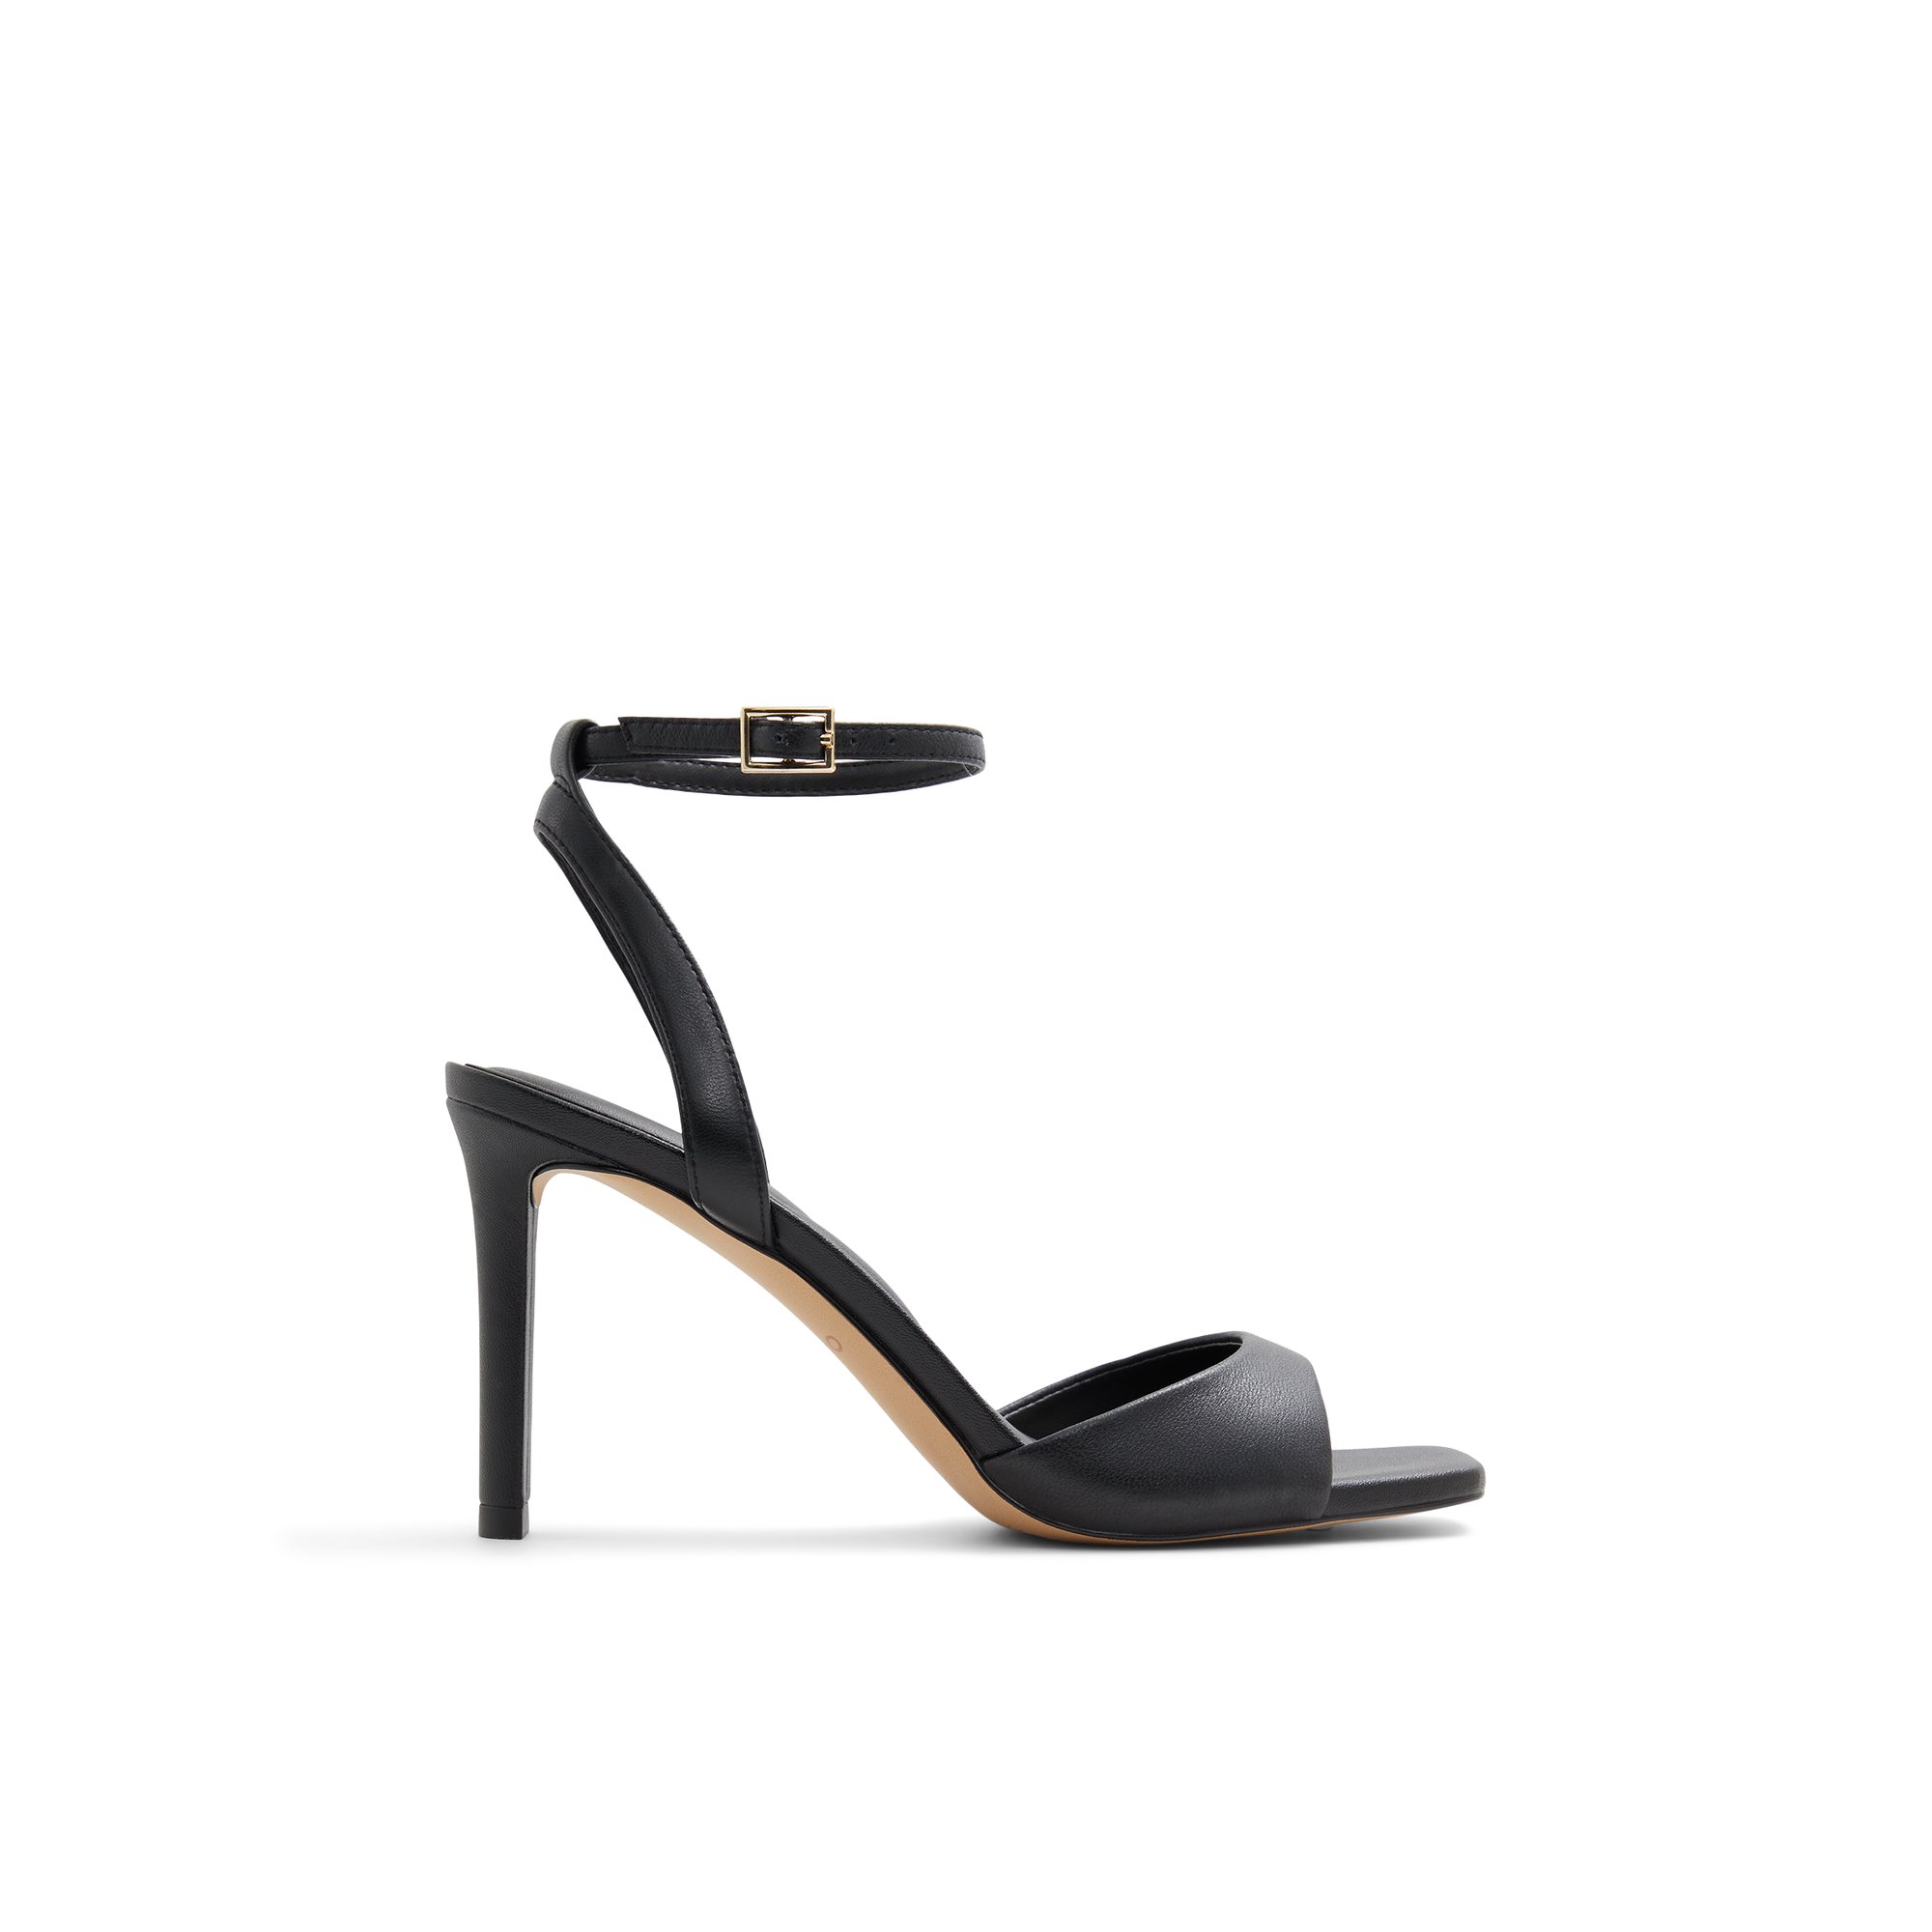 ALDO Sake - Women's Sandals Strappy - Black